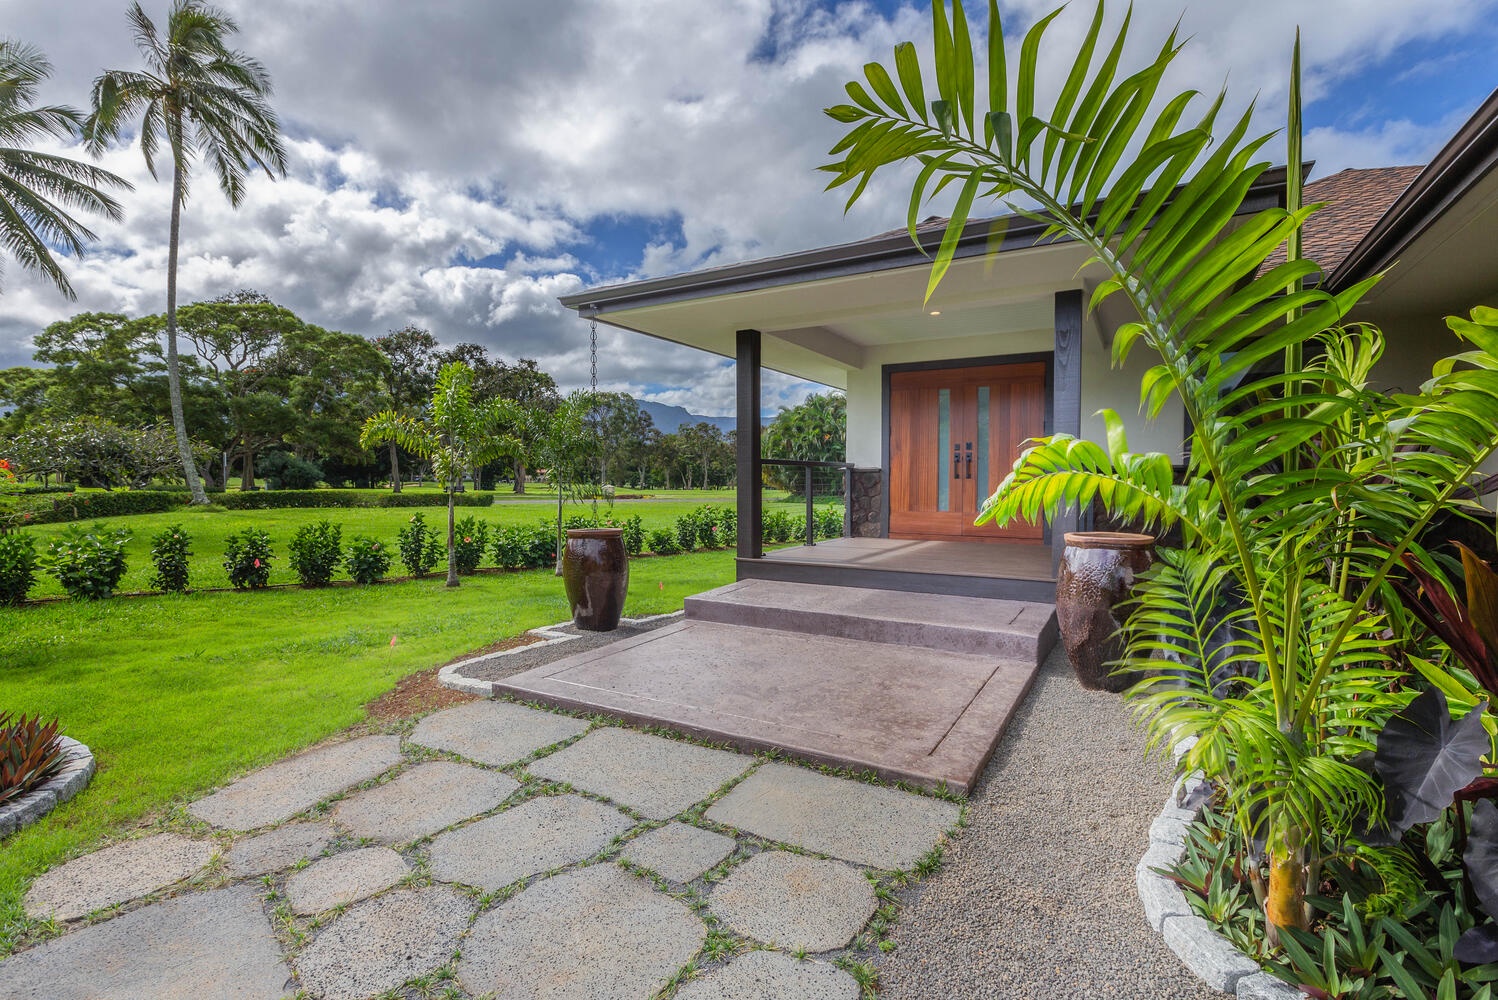 Princeville Vacation Rentals, Aloha Villa - Welcome home!